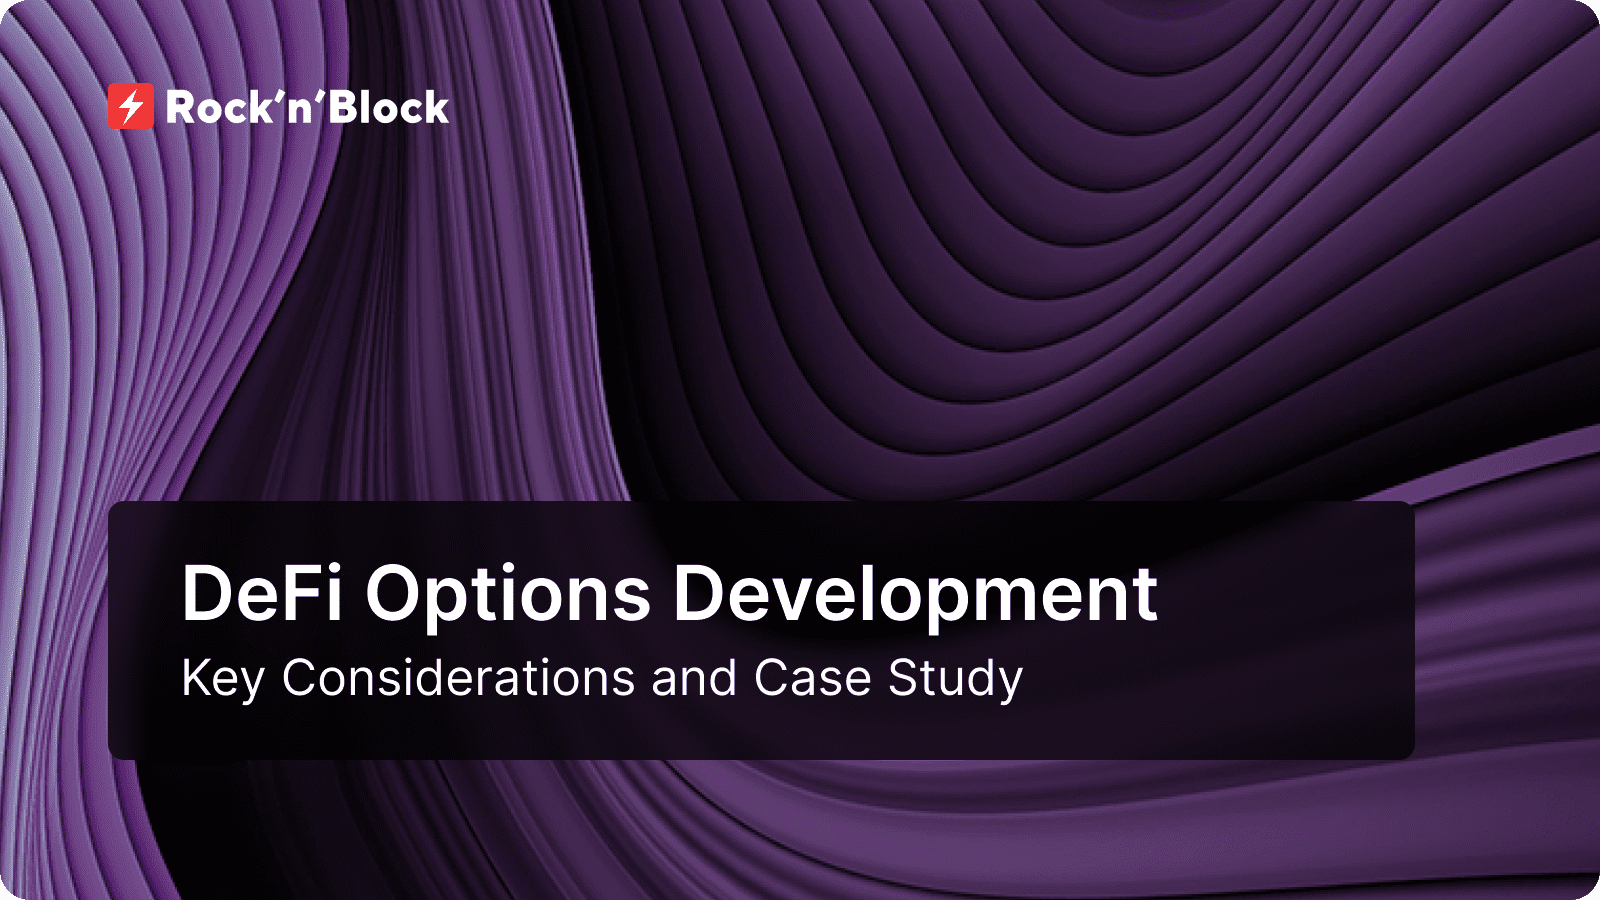  DeFi Options Development: Key Considerations and Case Study on DeFi Protocol Development